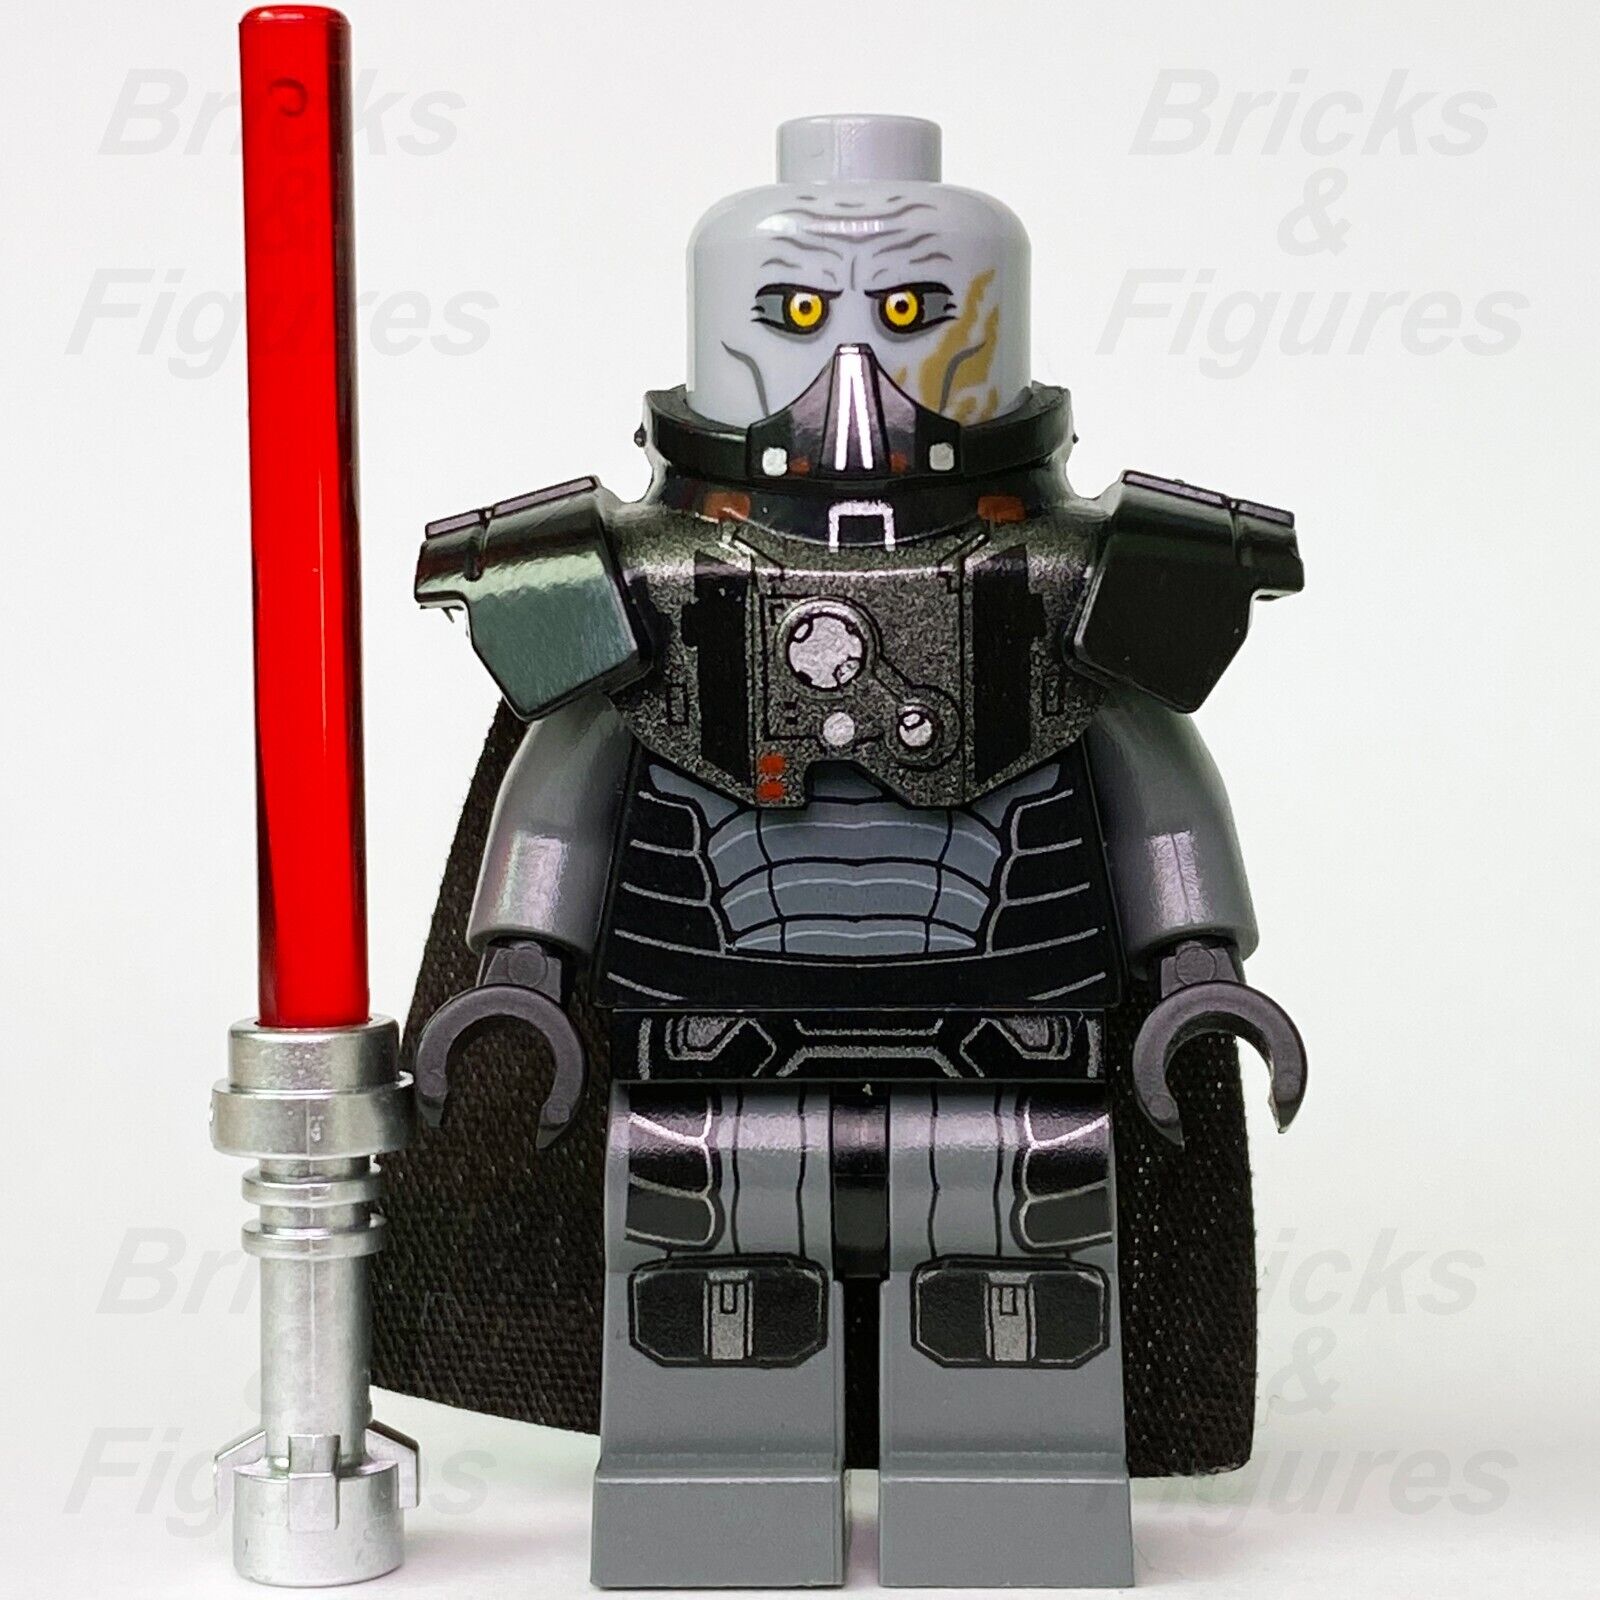 LEGO Star Wars Darth Malgus Minifigure The Old Republic Sith Lord 9500 sw0413